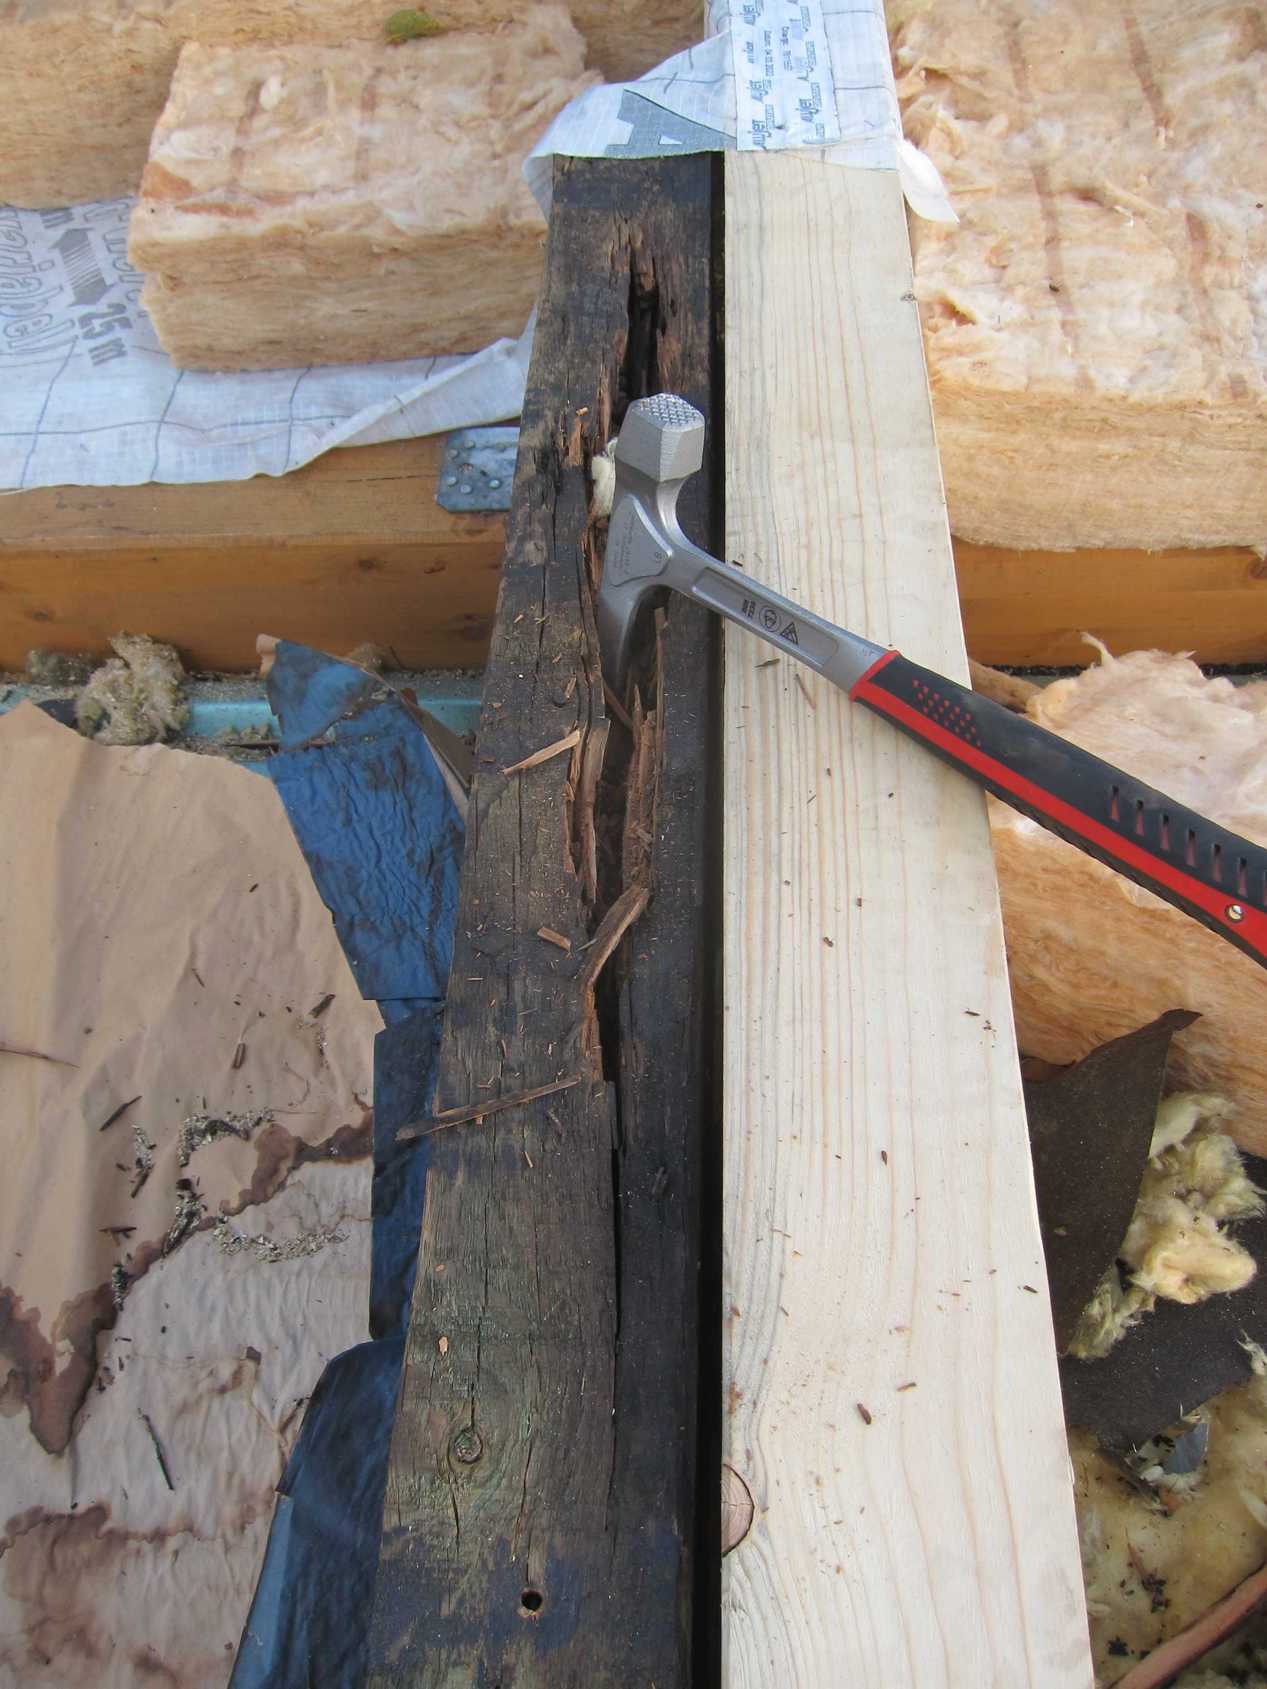 #Holzschutzberater #Holzkonstruktionen #Renovierung #Baubegleitung #Holzschutz #Holzschutzgutachten #Holzkonstruktionen #Schadensanalyse